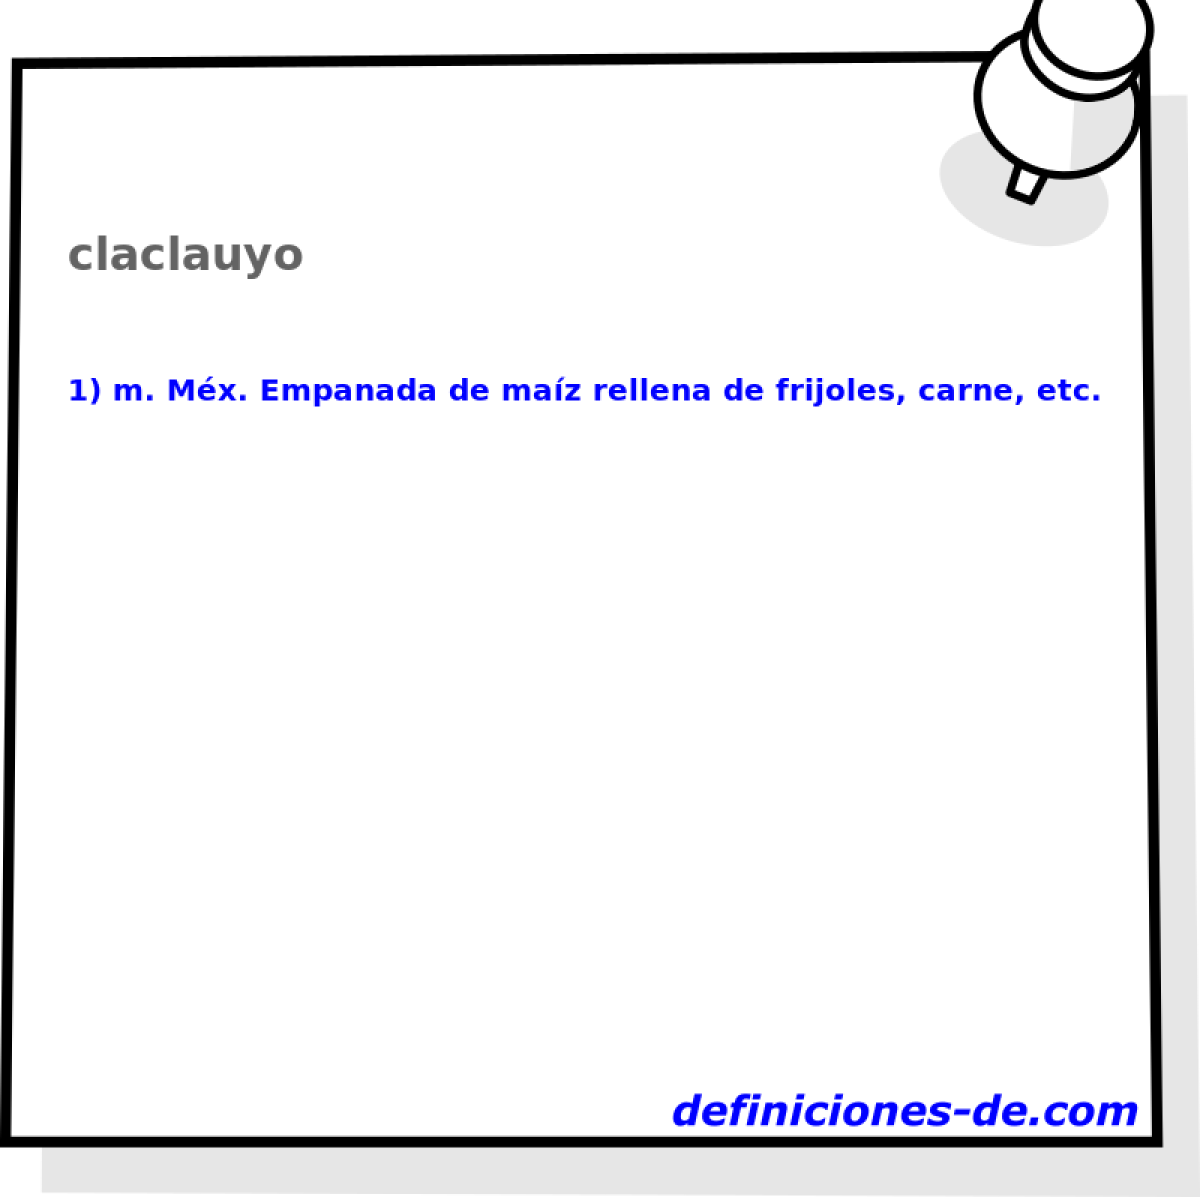 claclauyo 